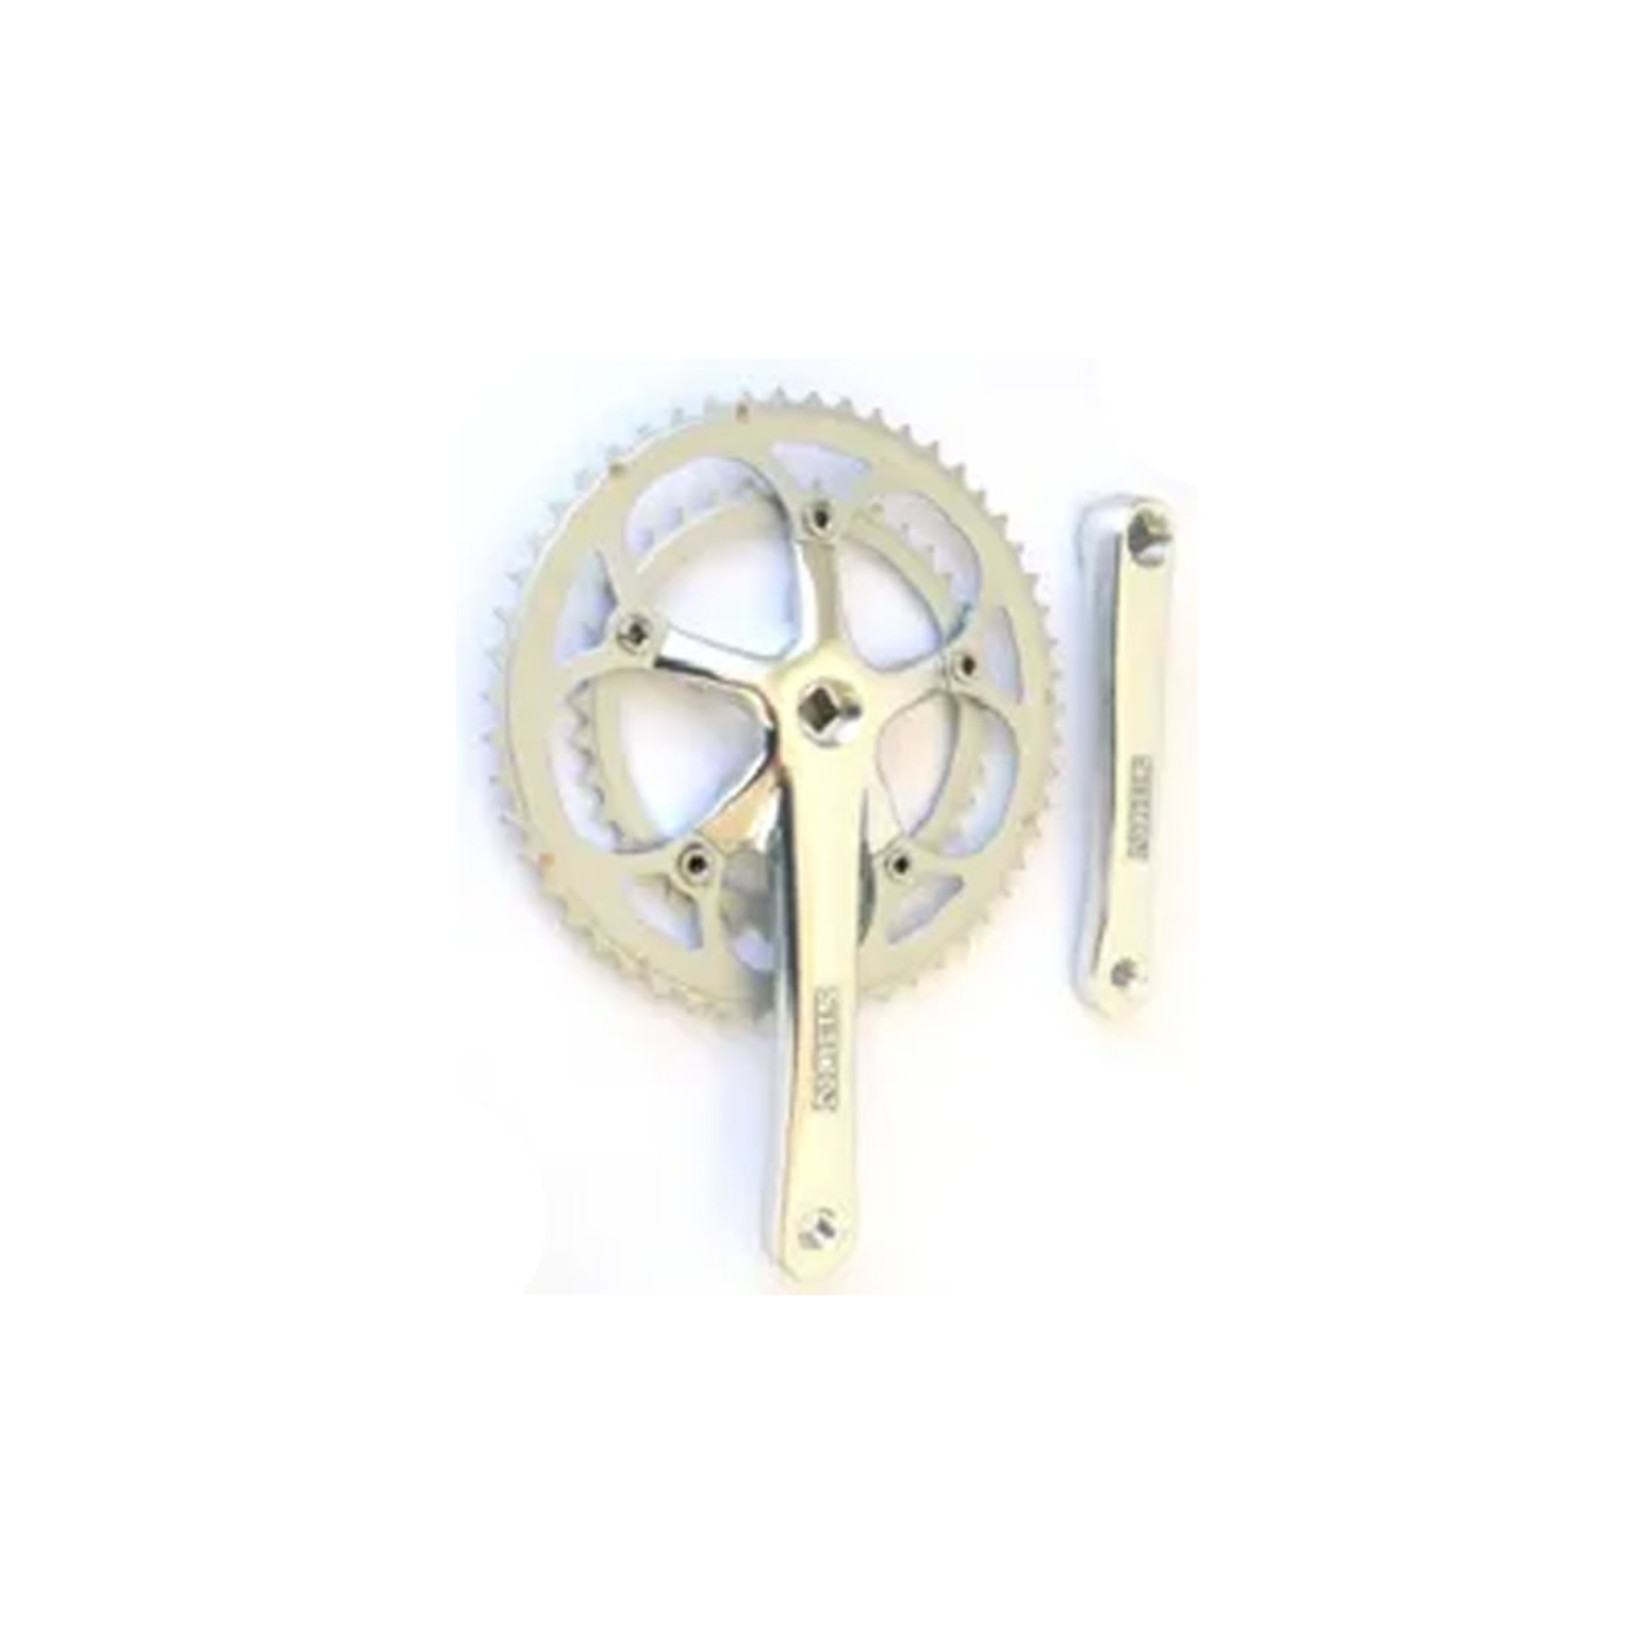 incomex BPW Bike/Cycling Chainwheel Set 170mm X 39/53T - Steel Chain Rings - Silver